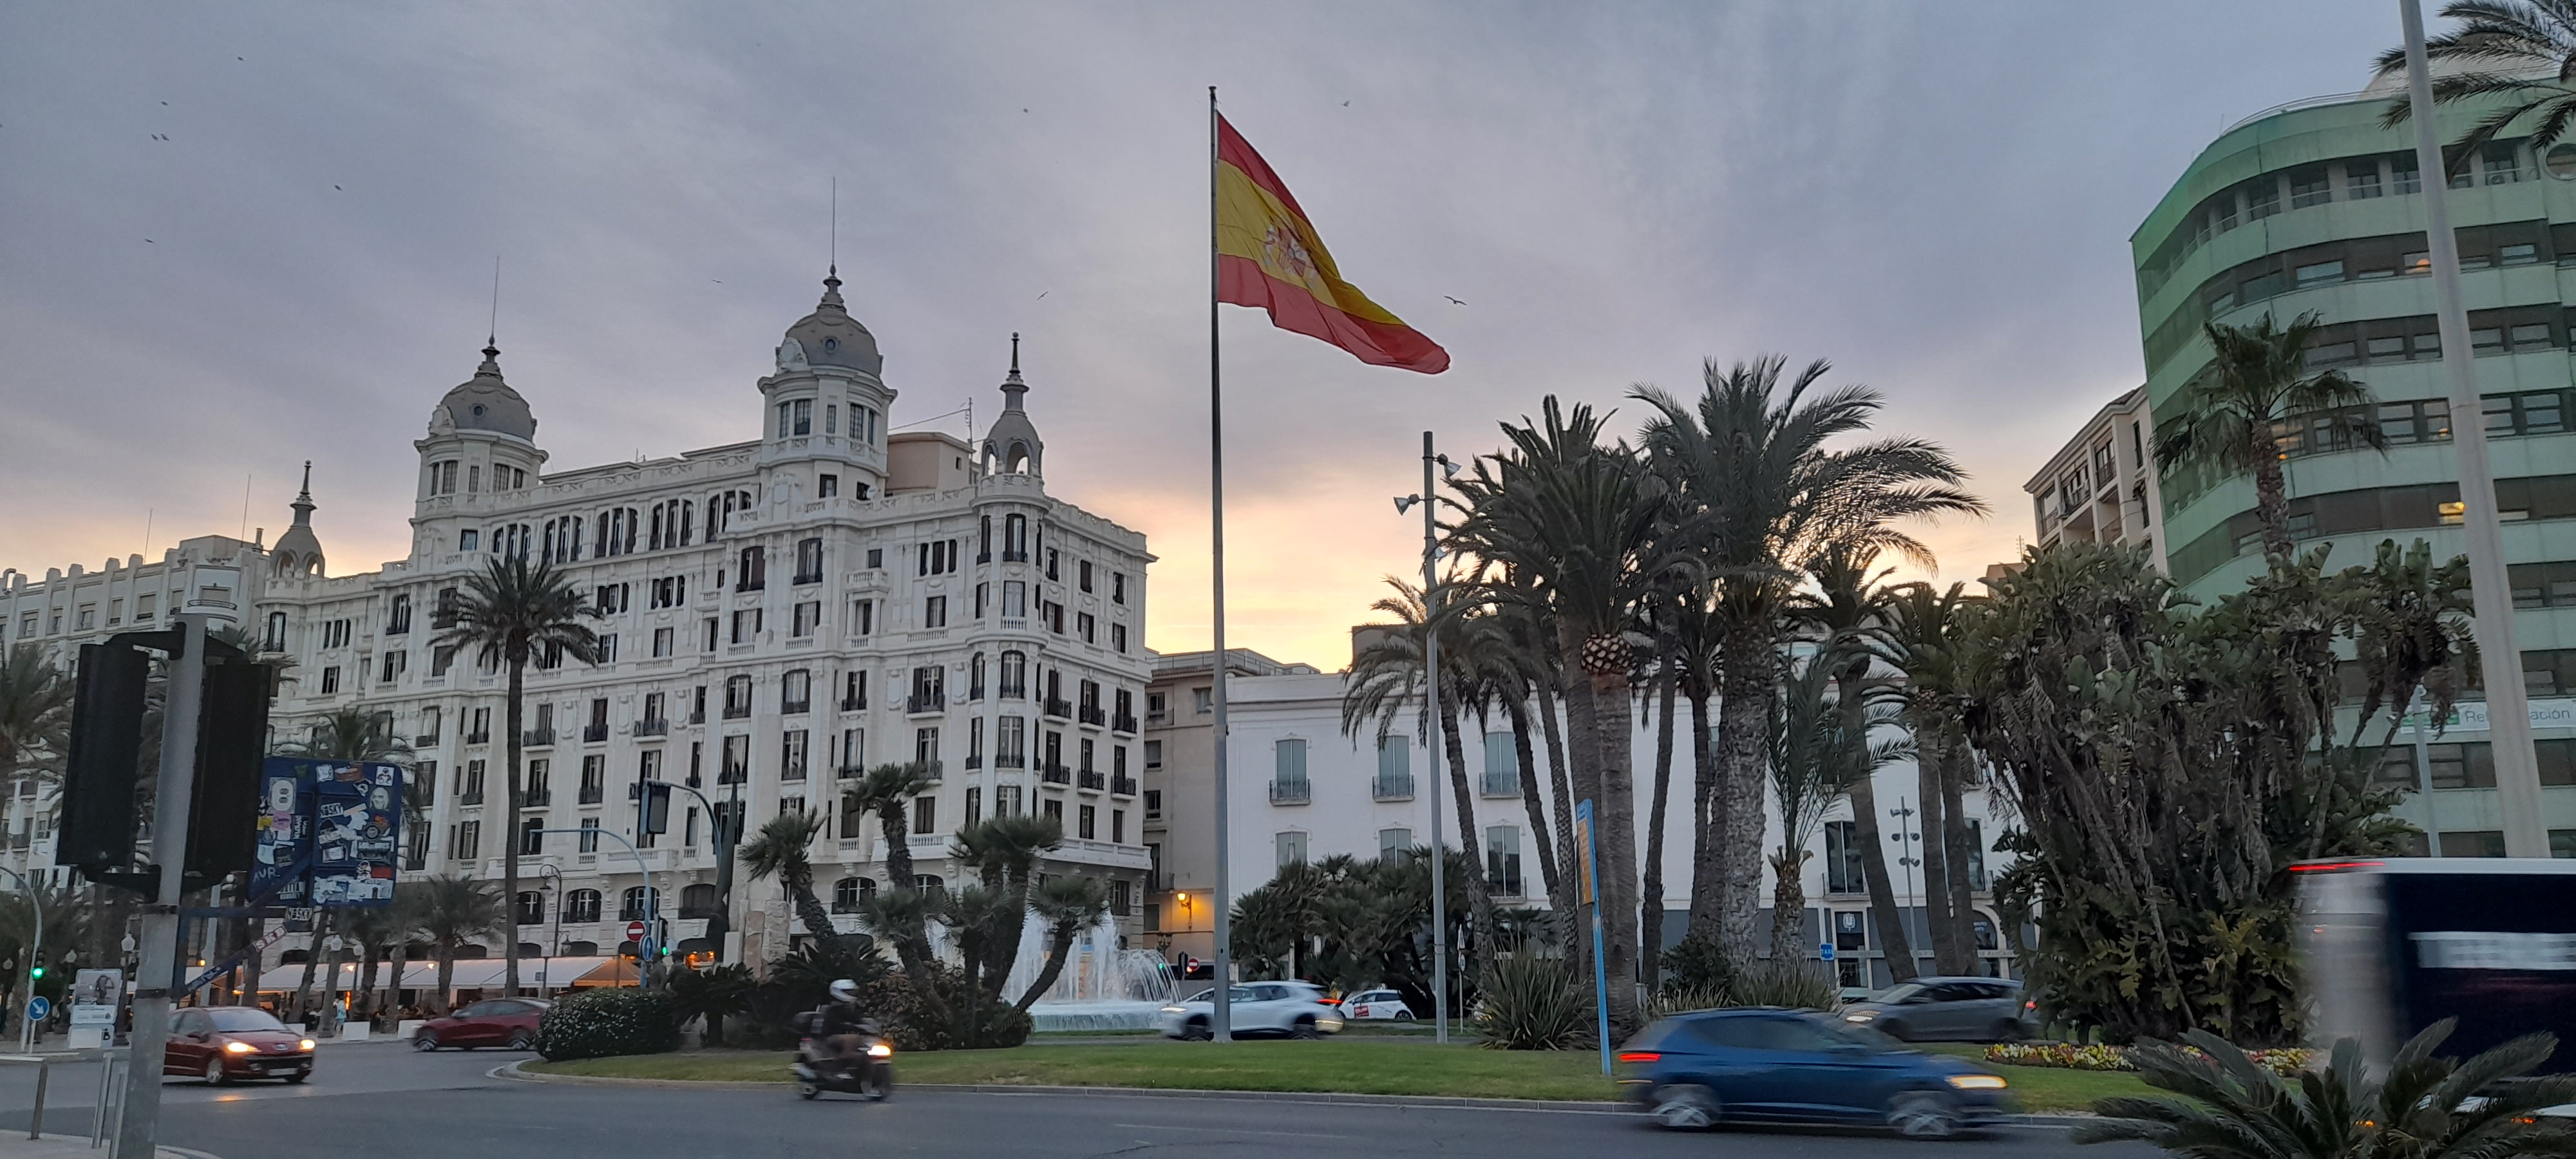 Spanish flag in Alicante